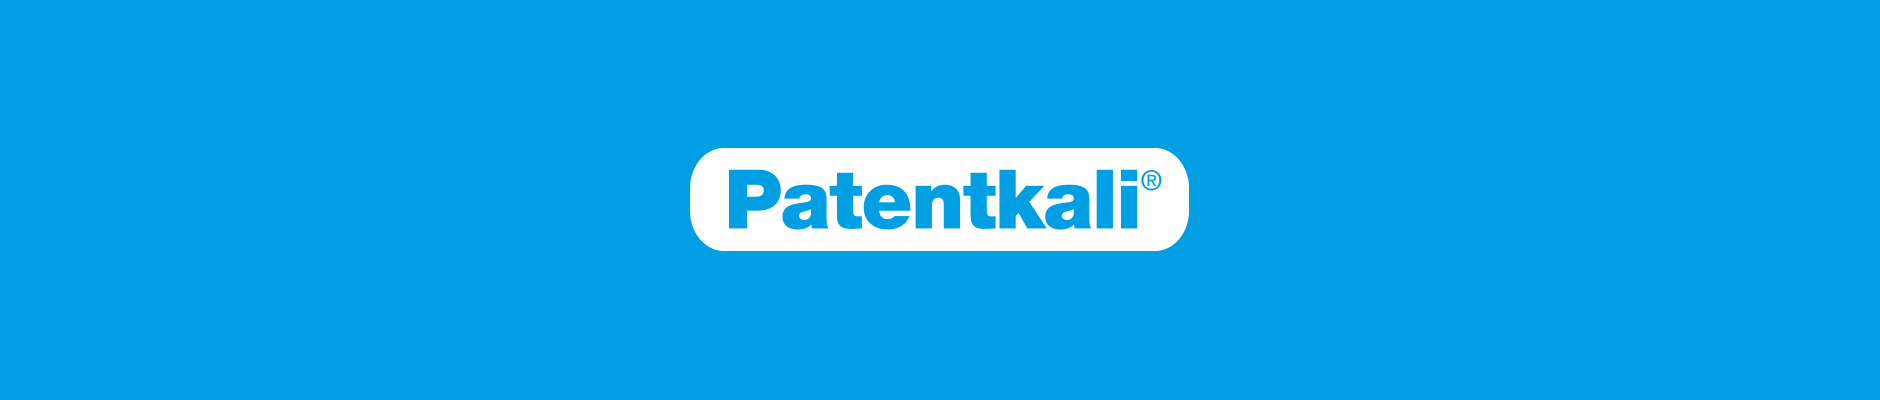 header-fertiliser-campaign-patentkali